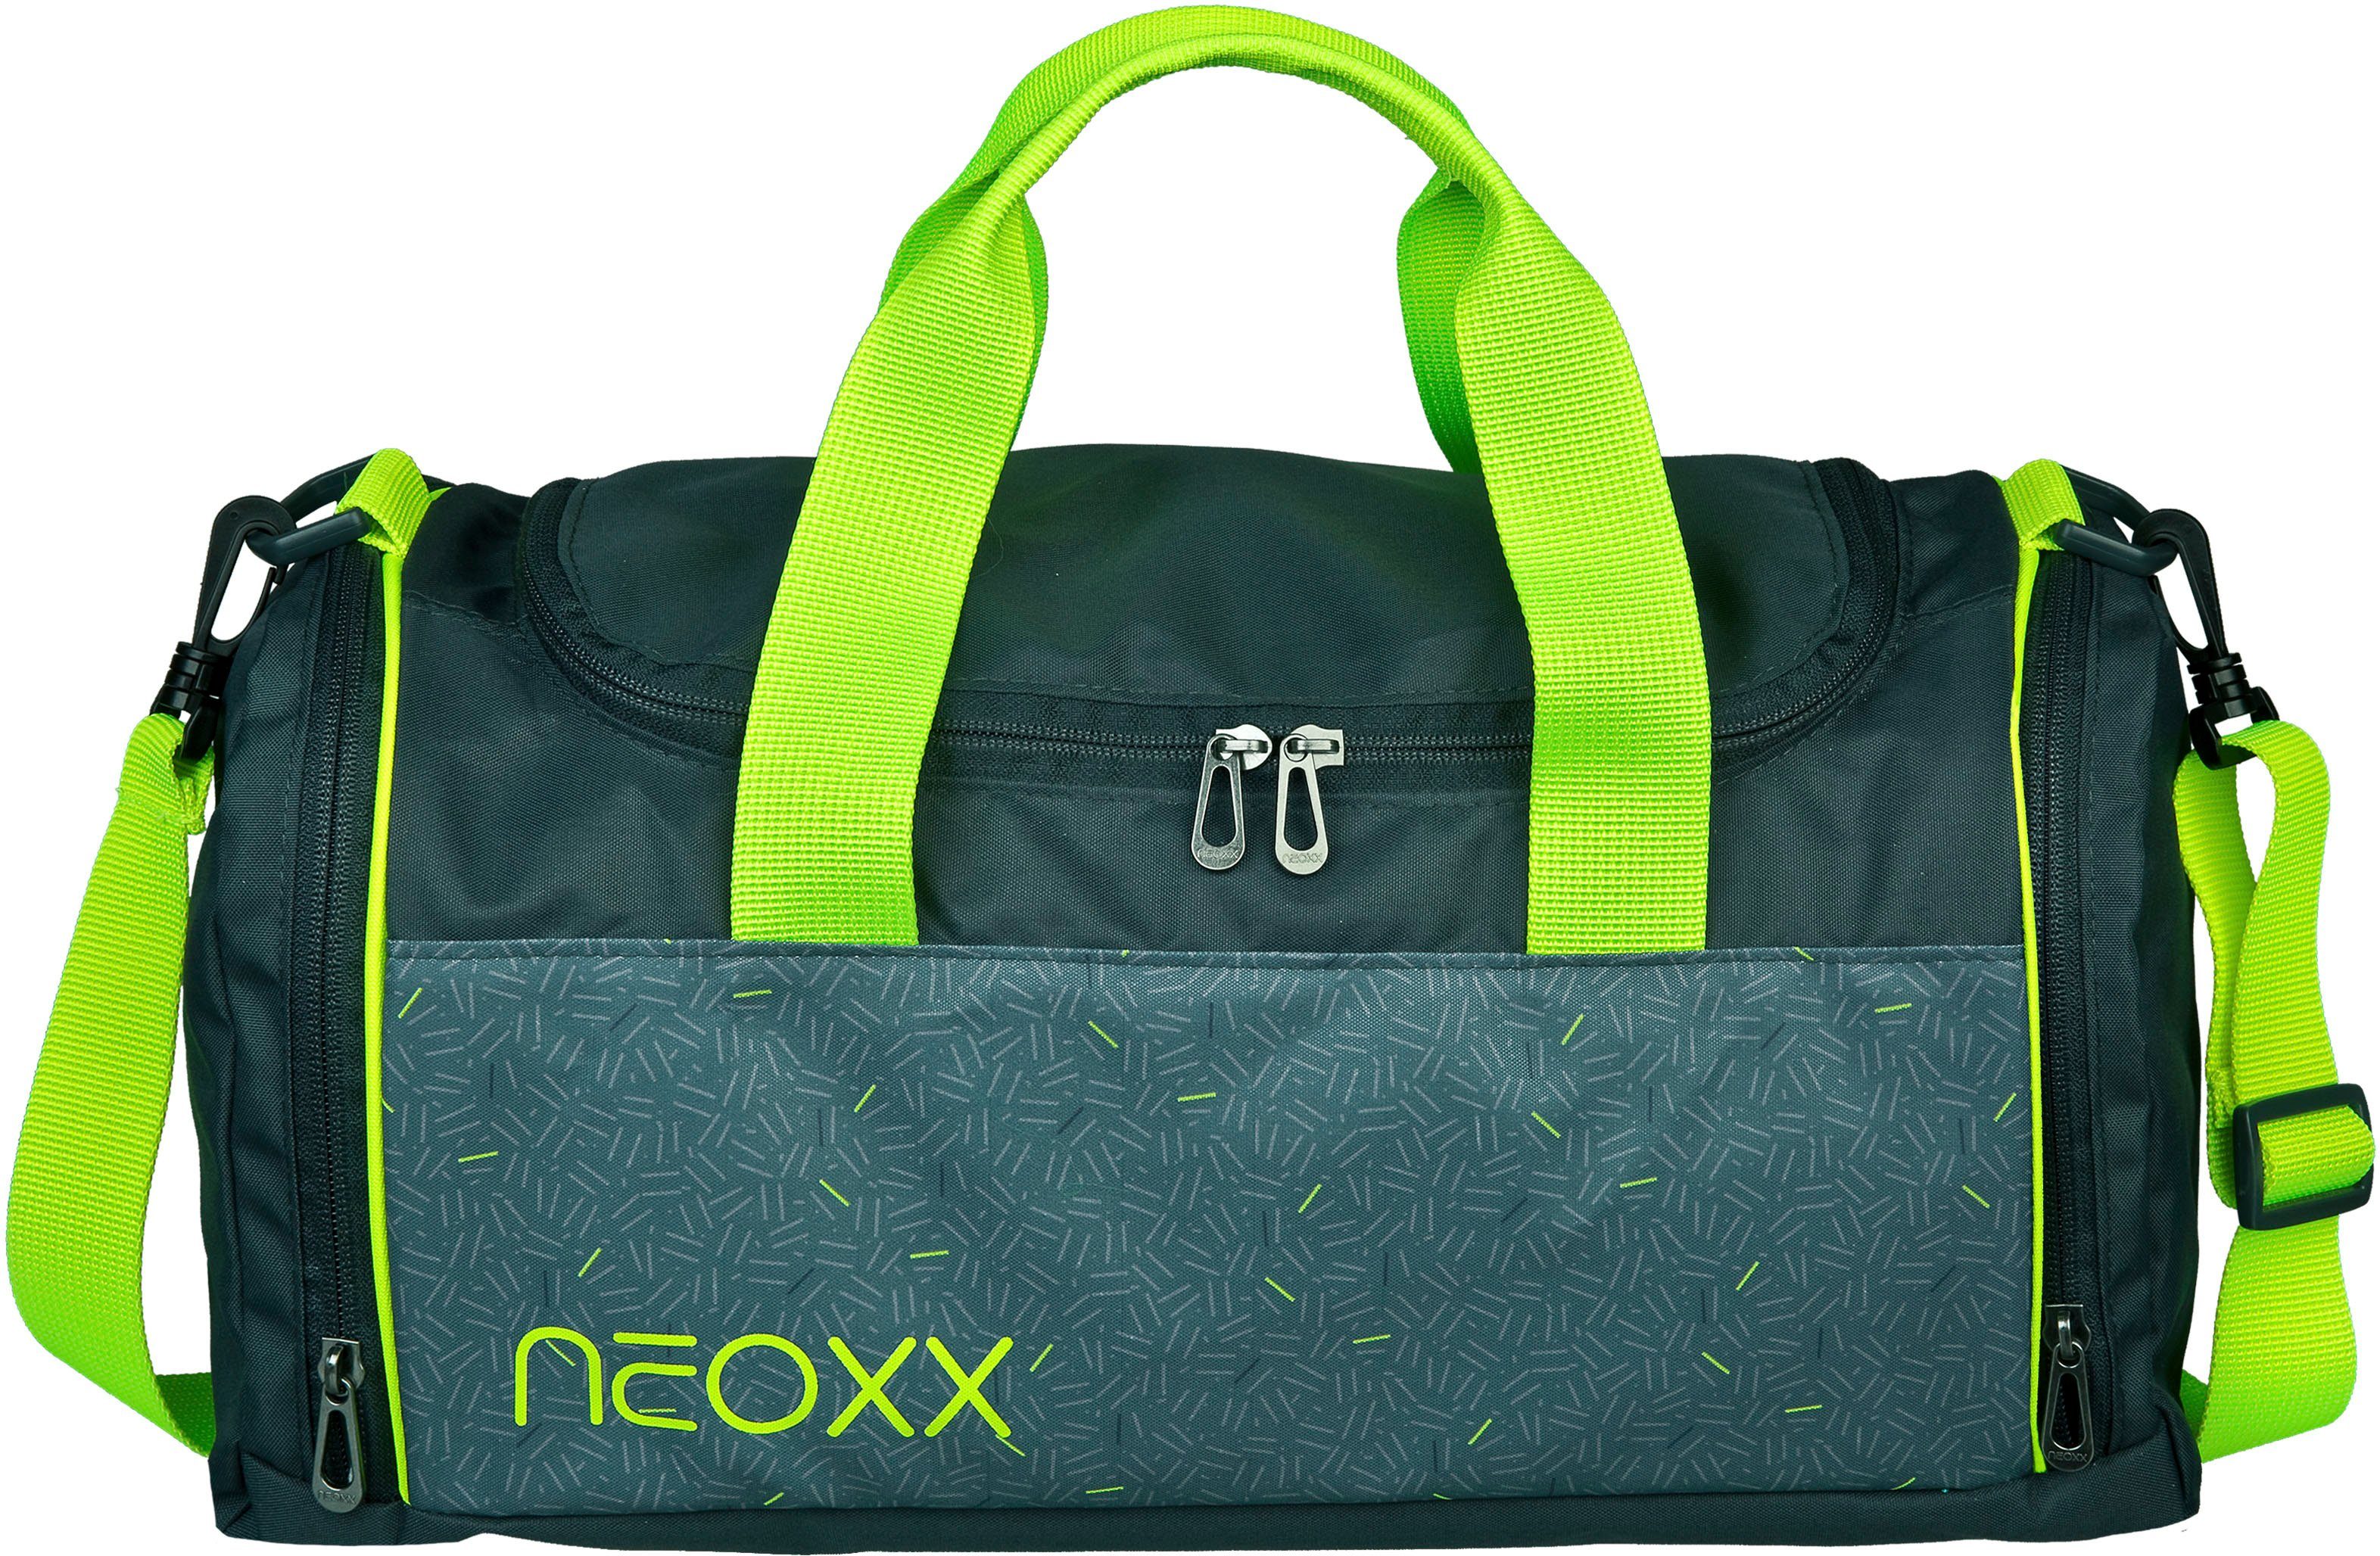 neoxx Sporttasche Champ, Boom, zum Teil aus recyceltem Material